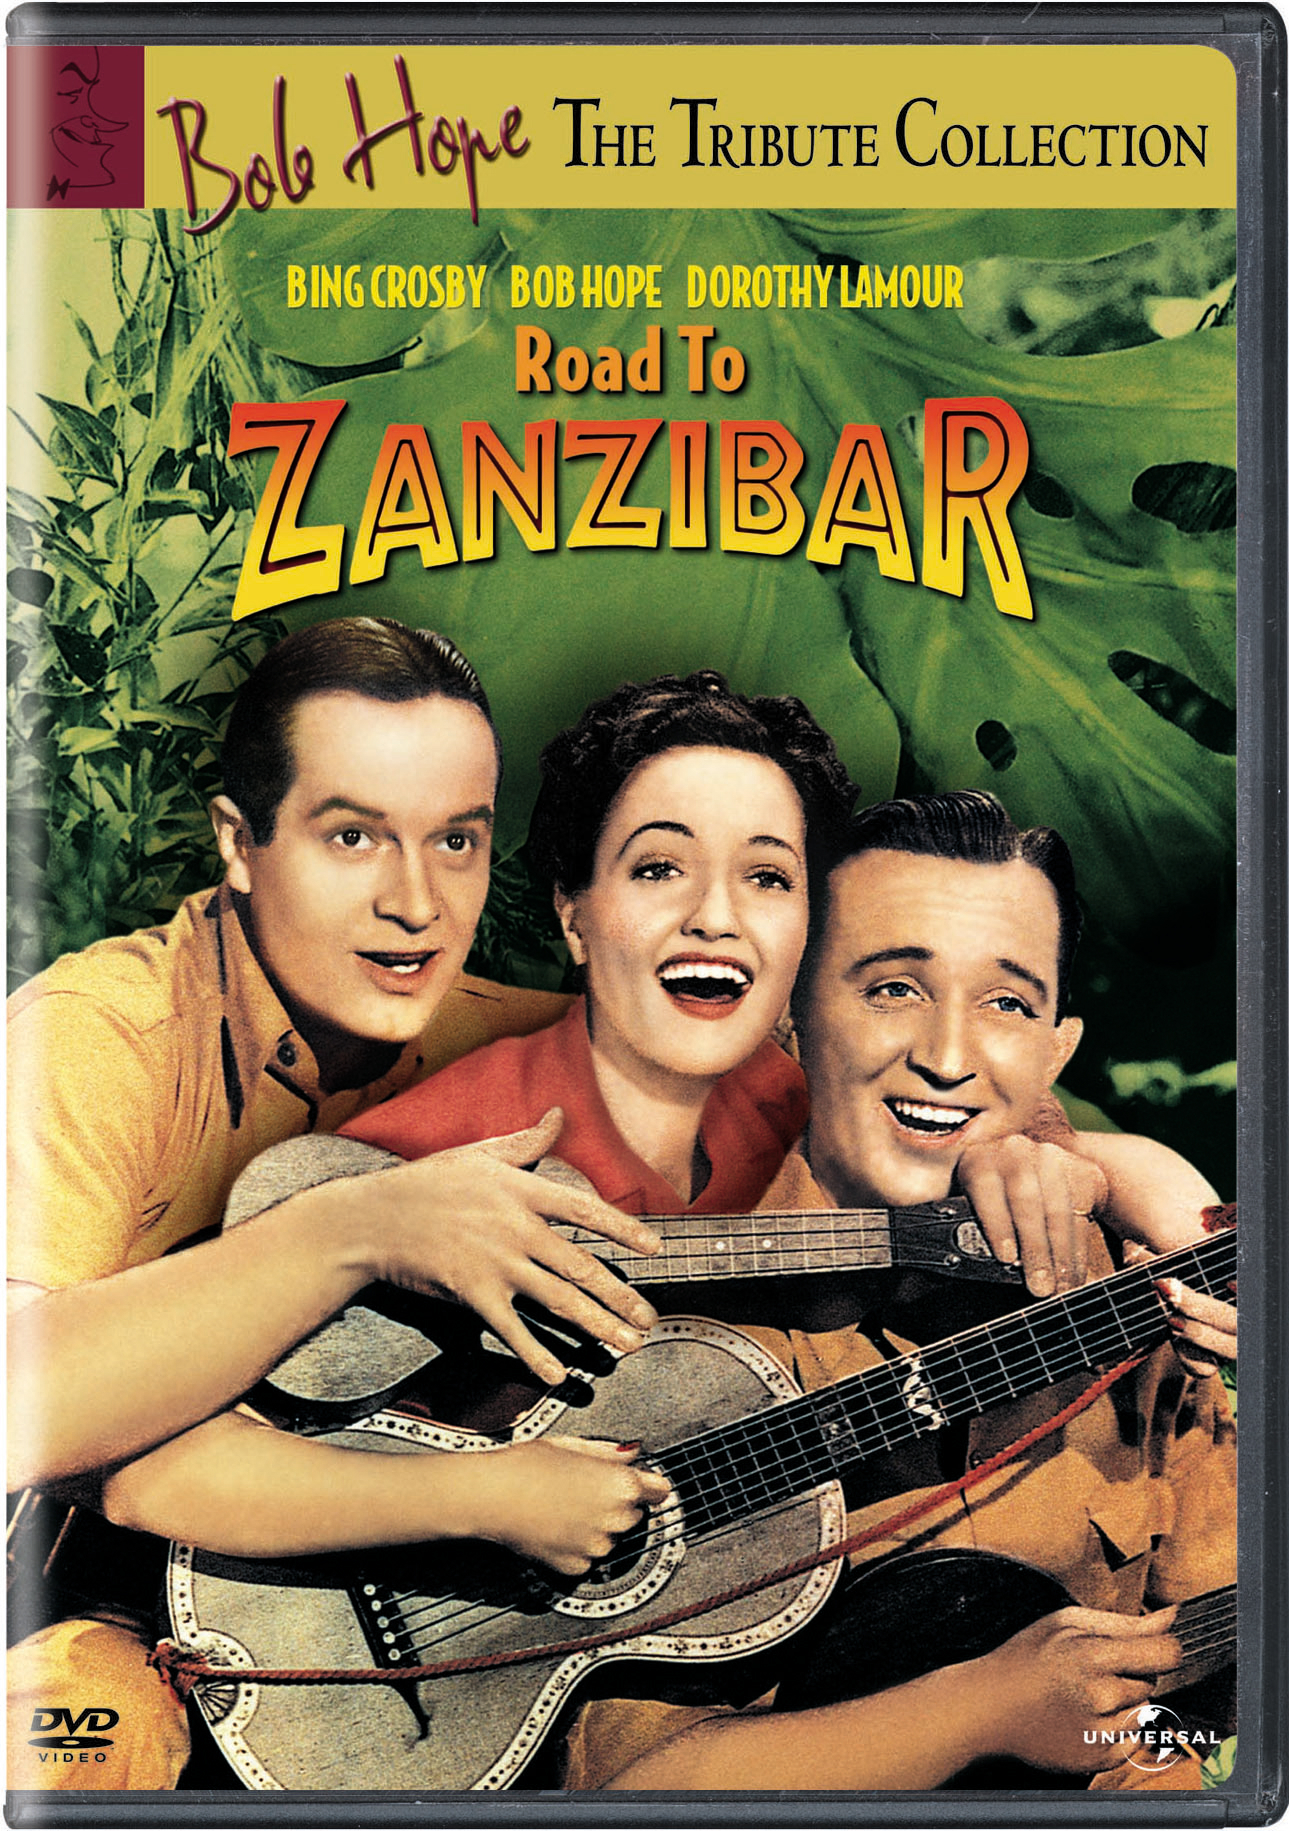 Road To Zanzibar - DVD [ 1941 ]  - Classic Movies On DVD - Movies On GRUV